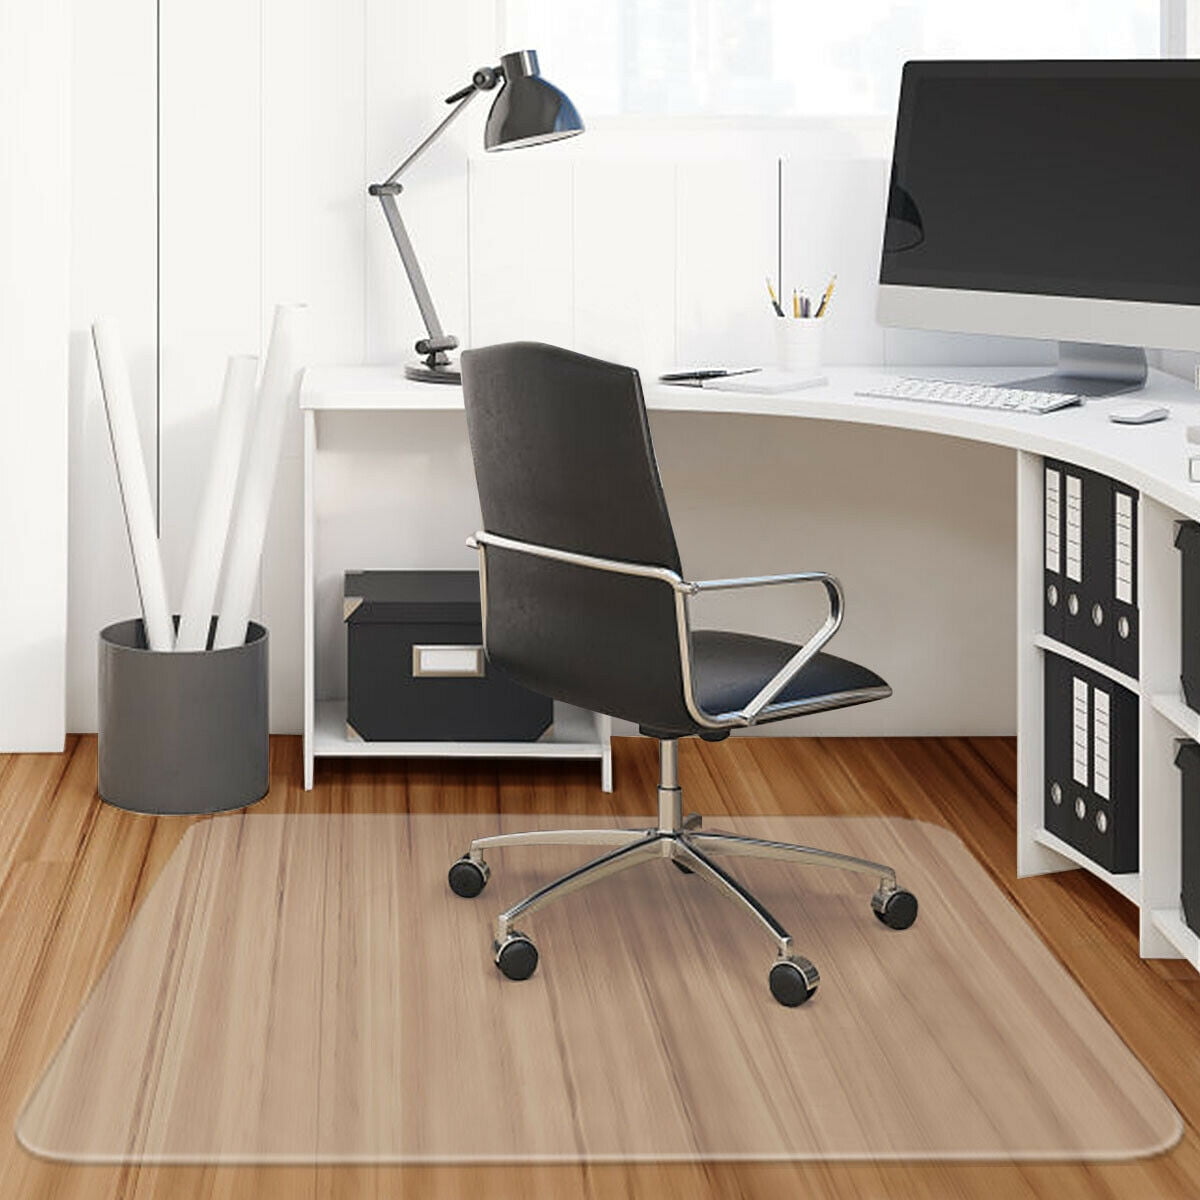 Large Office Chair Mat For Hard Floors 59''×47'' Heavy Duty Clear Wood Tile 